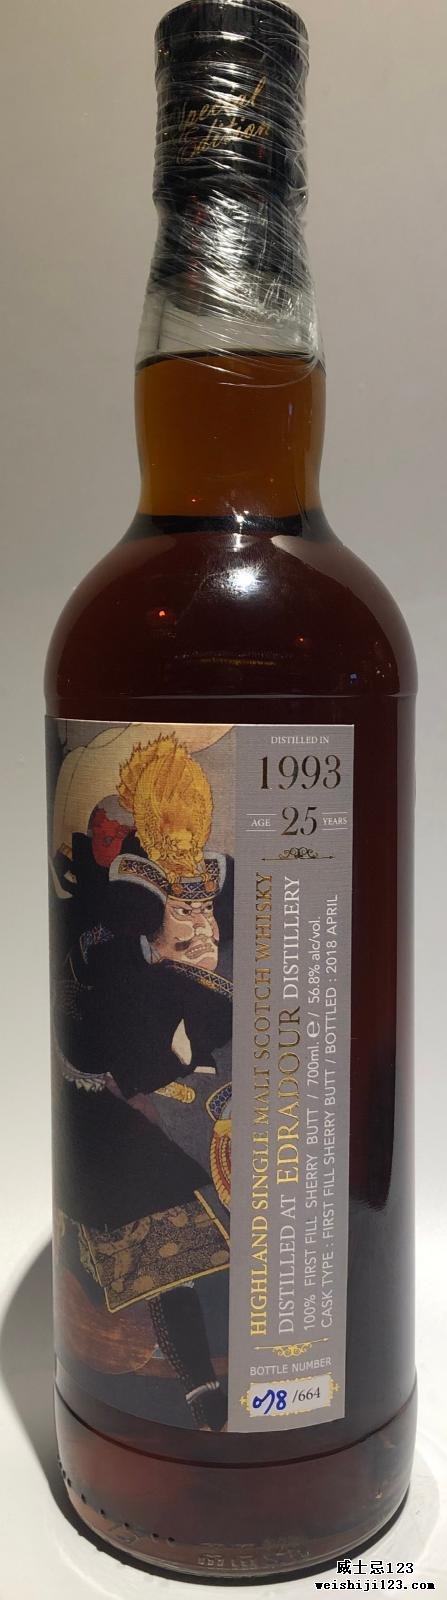 Edradour 1993 UD - FAKE bottle